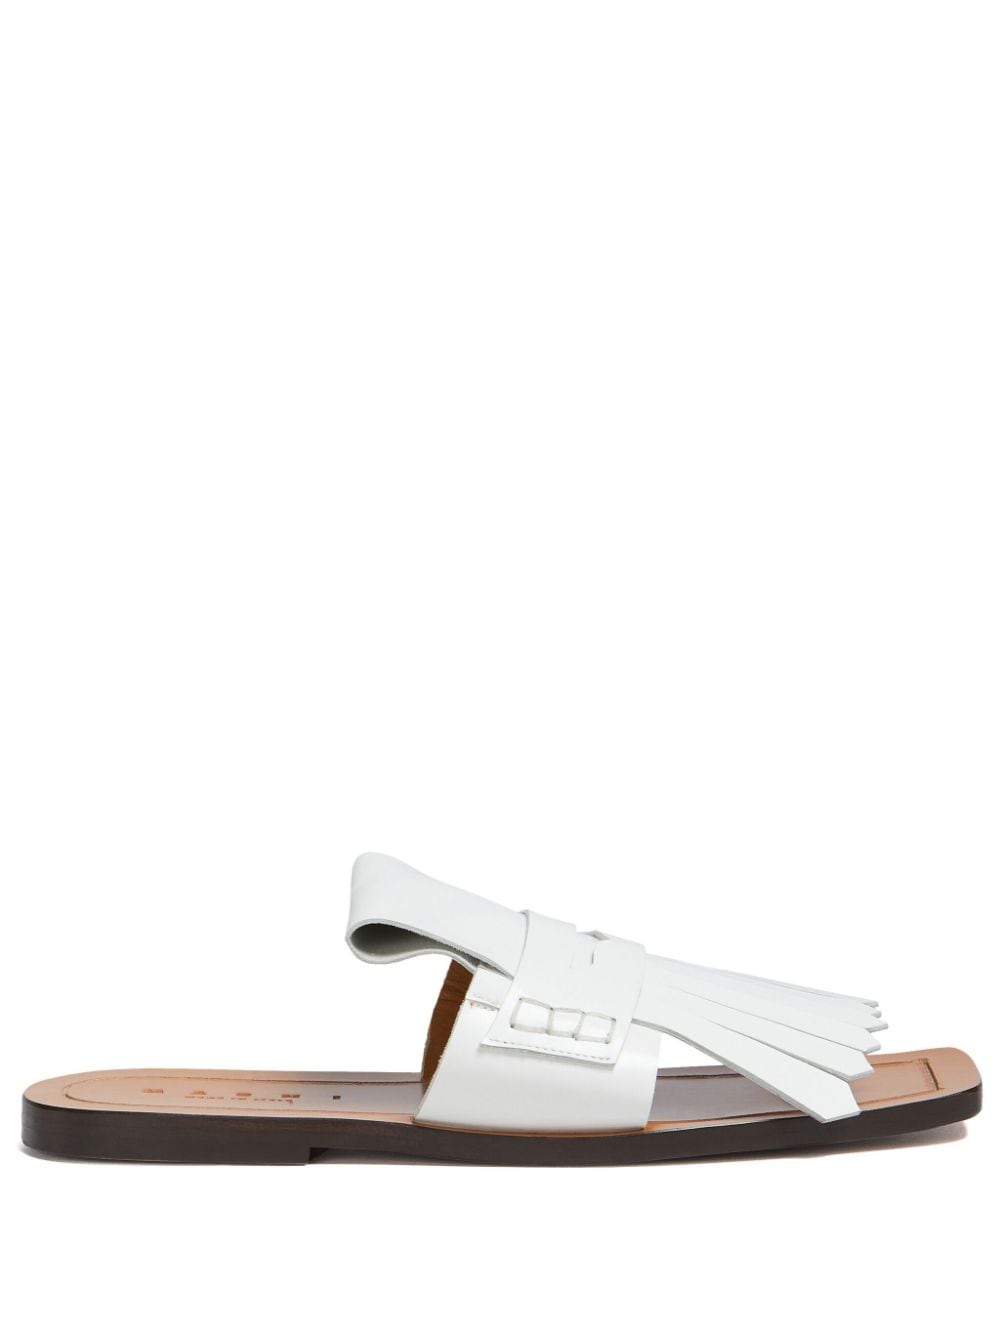 Marni fringed leather flat sandals - White von Marni